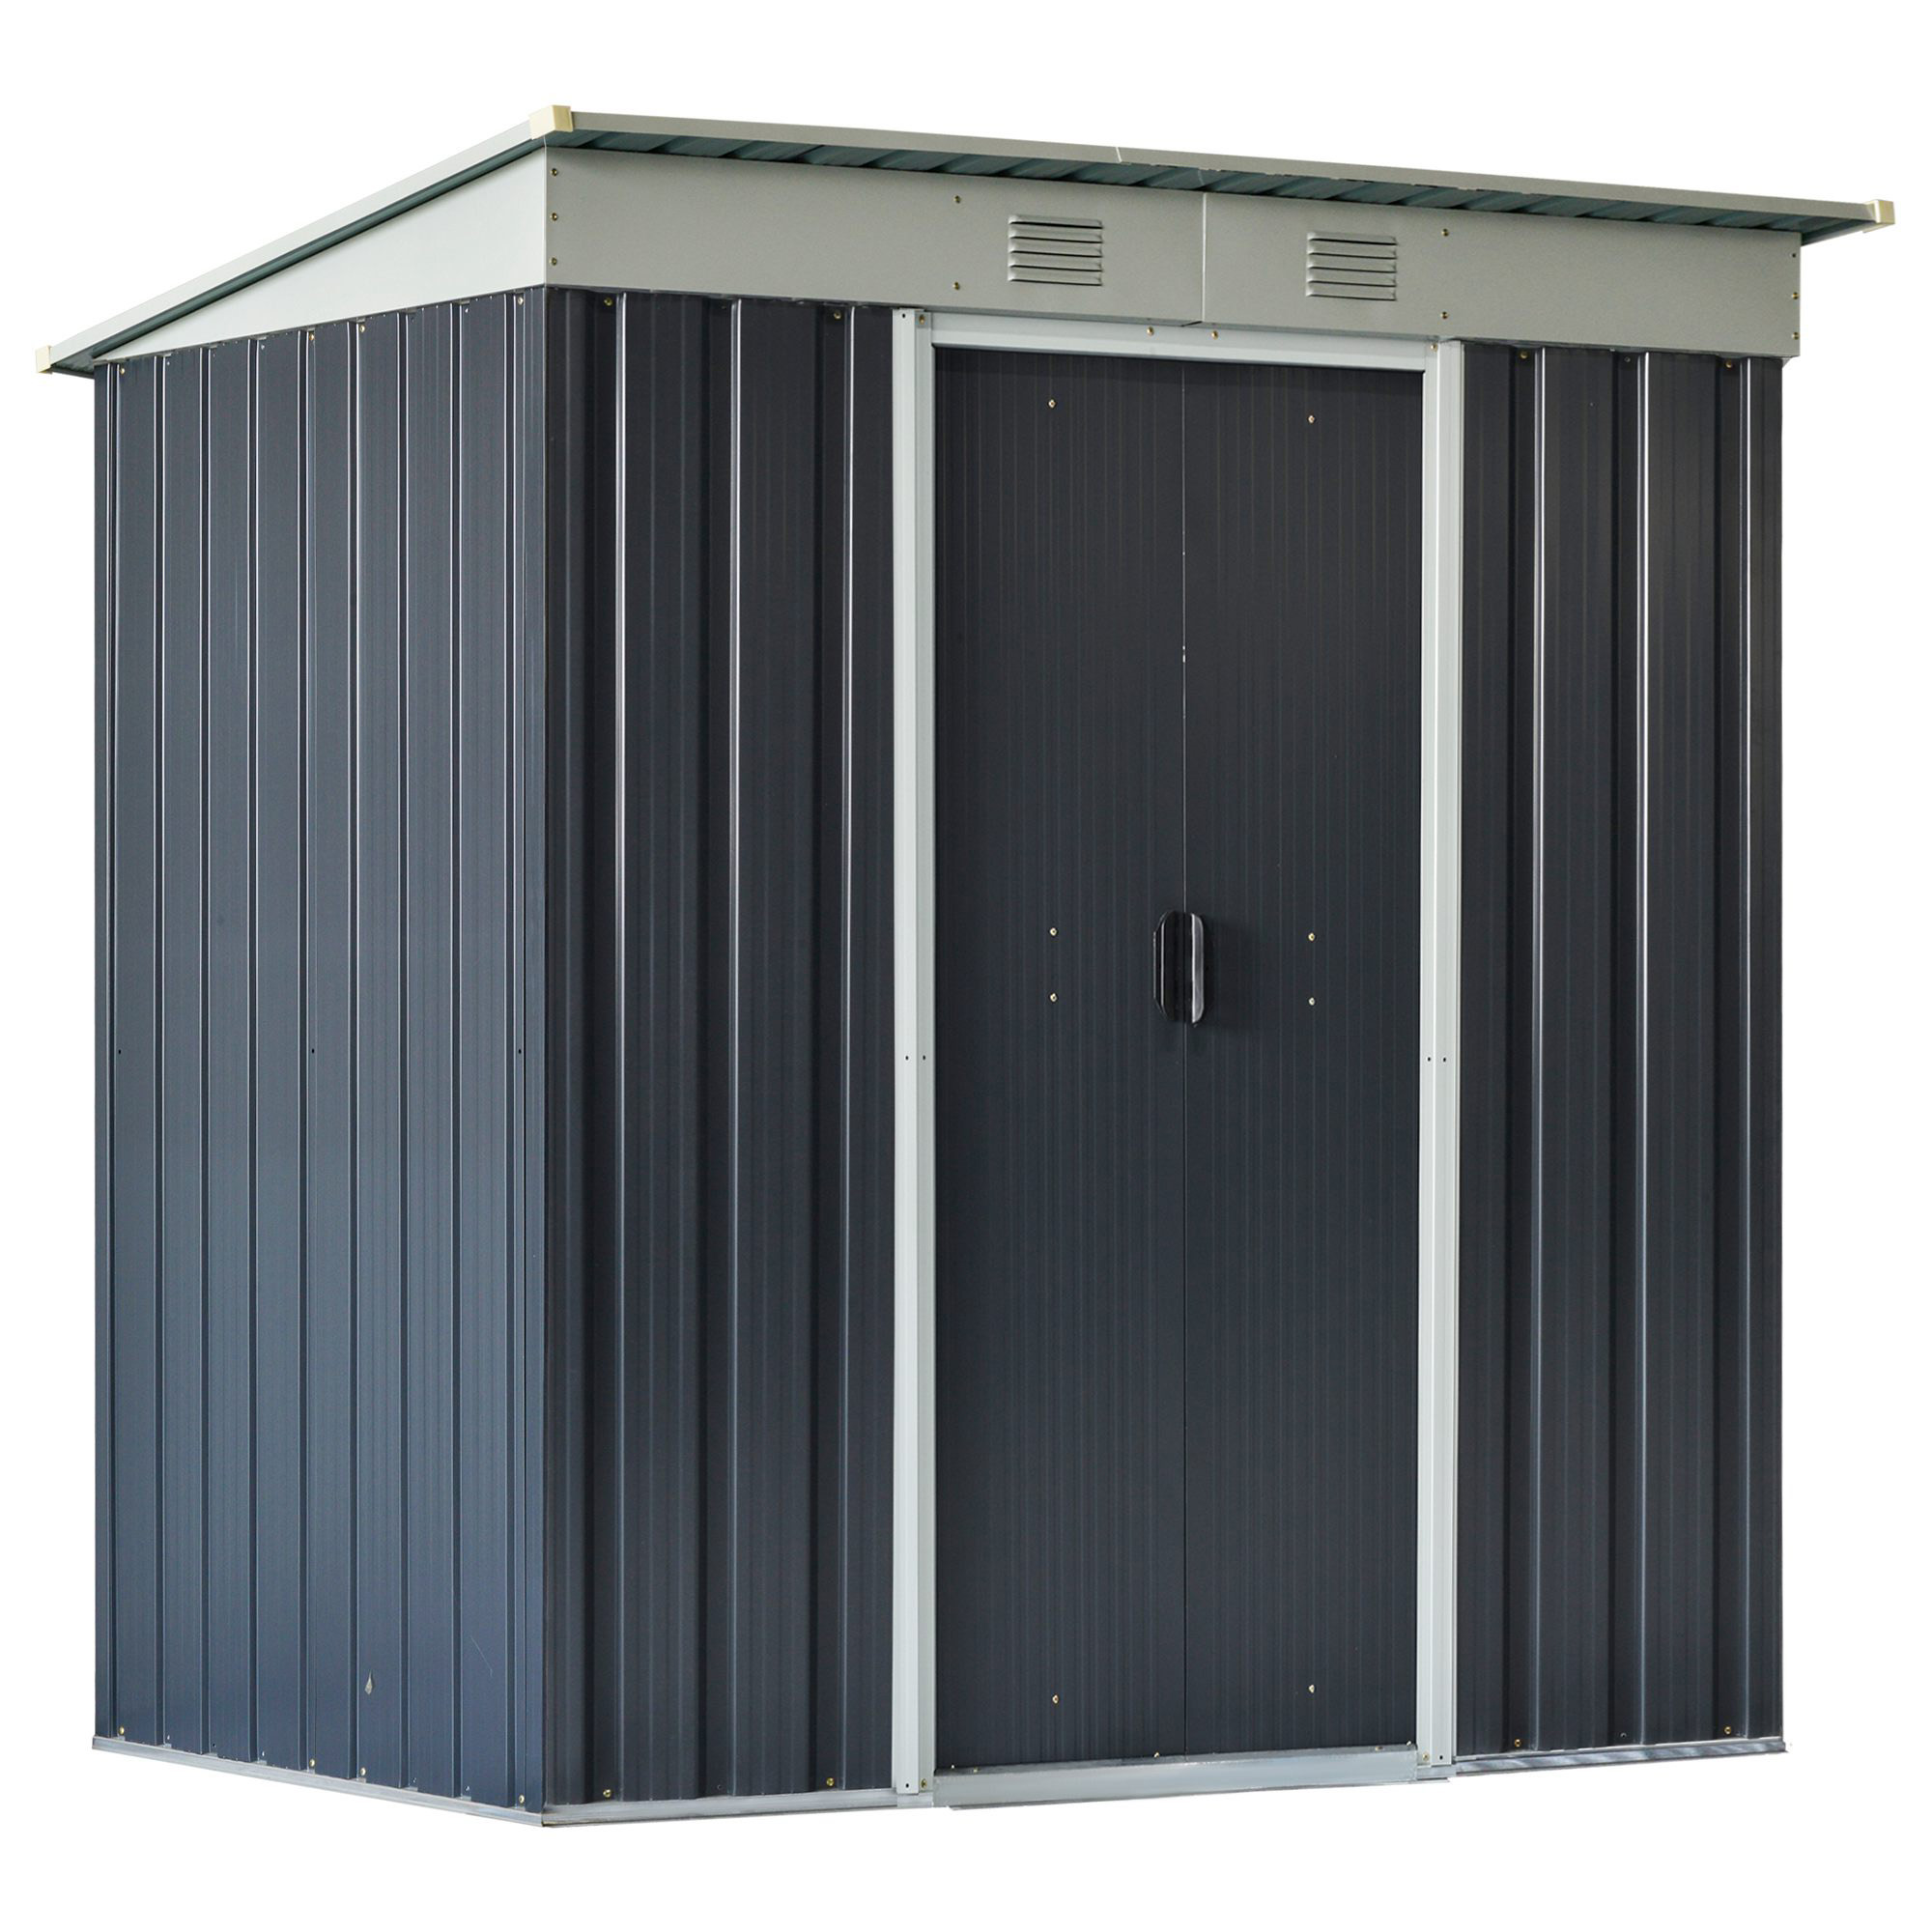 7' x 4' Metal Outdoor Storage Shed Sliding Doors Vents Grey